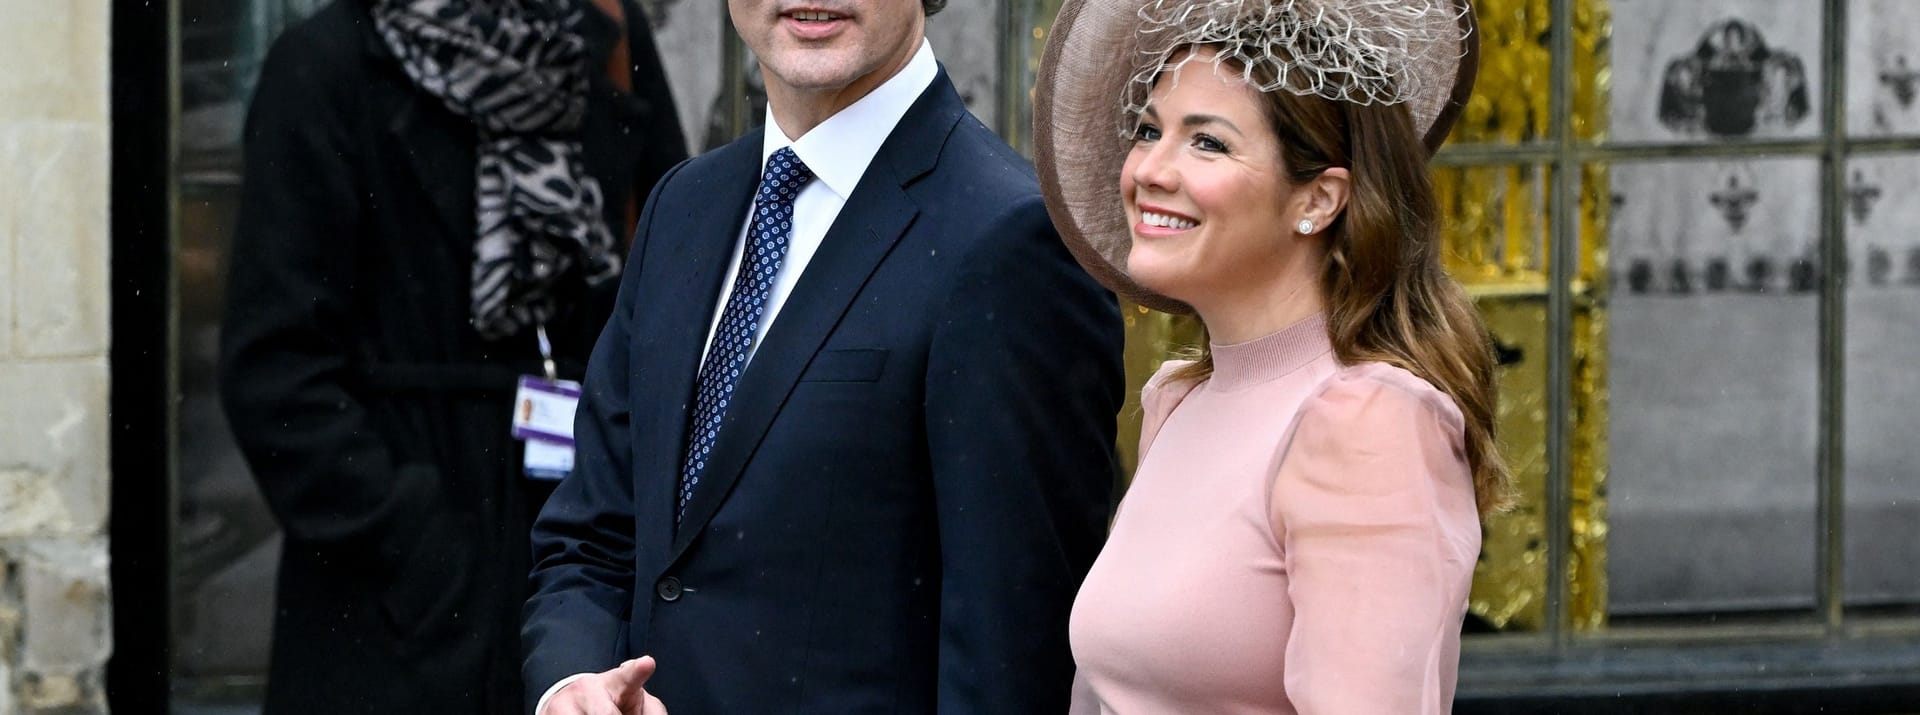 Premierminister Justin Trudeau mit seiner Frau Sophie Trudeau